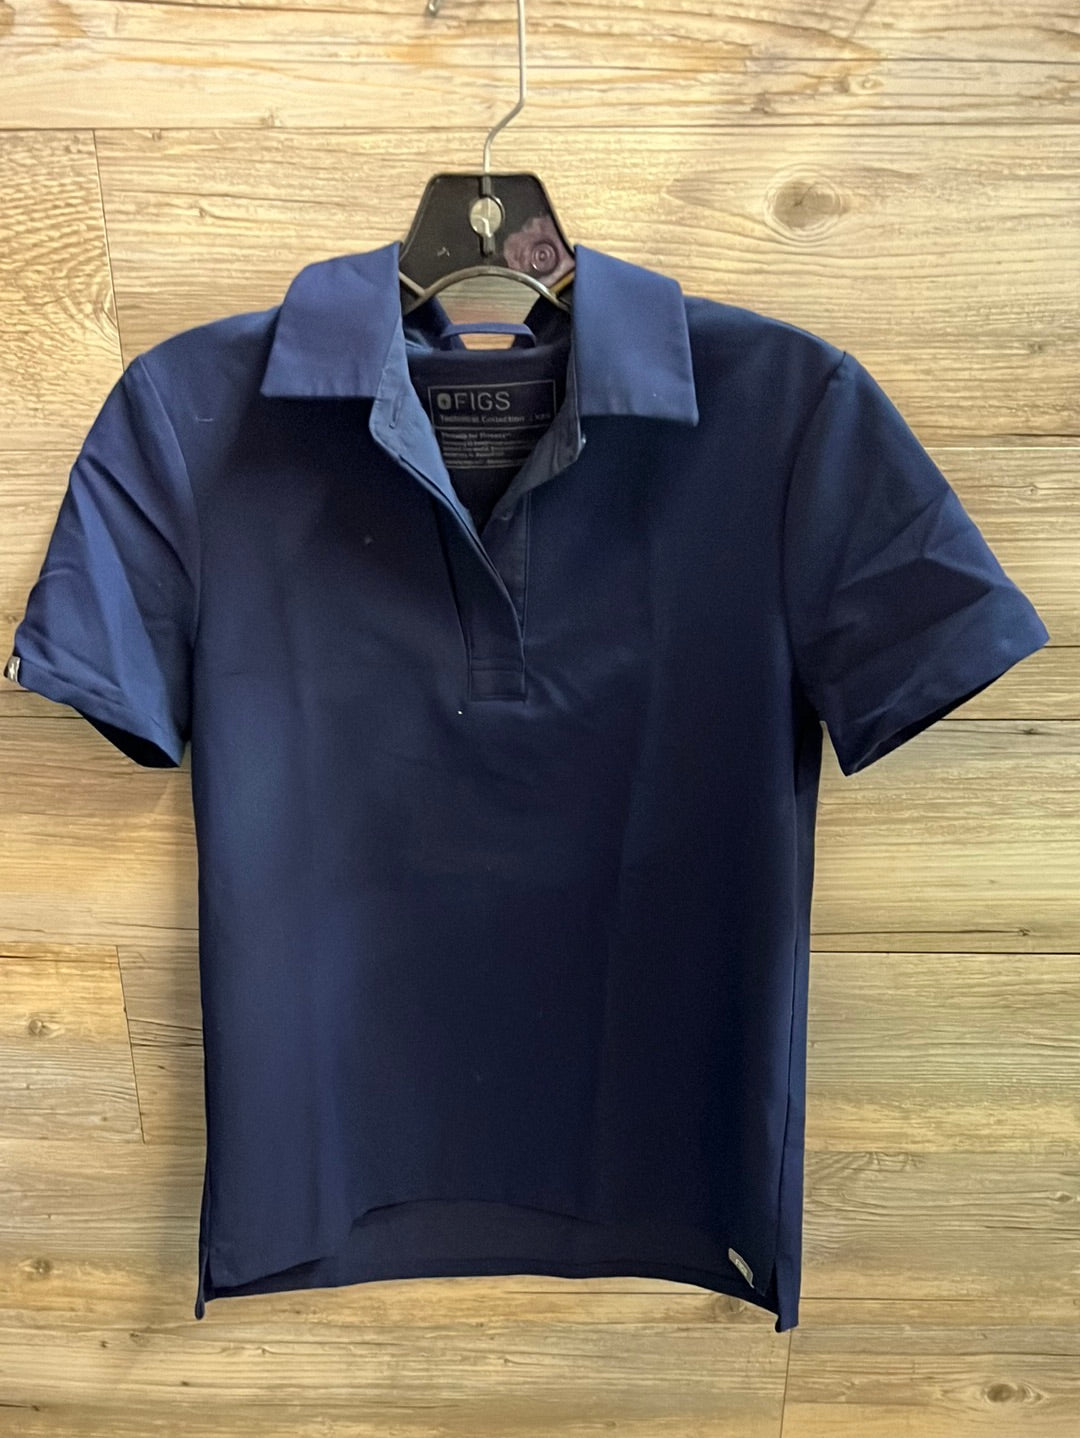 Figs Technical Collection Blue Shirt, Size XXS